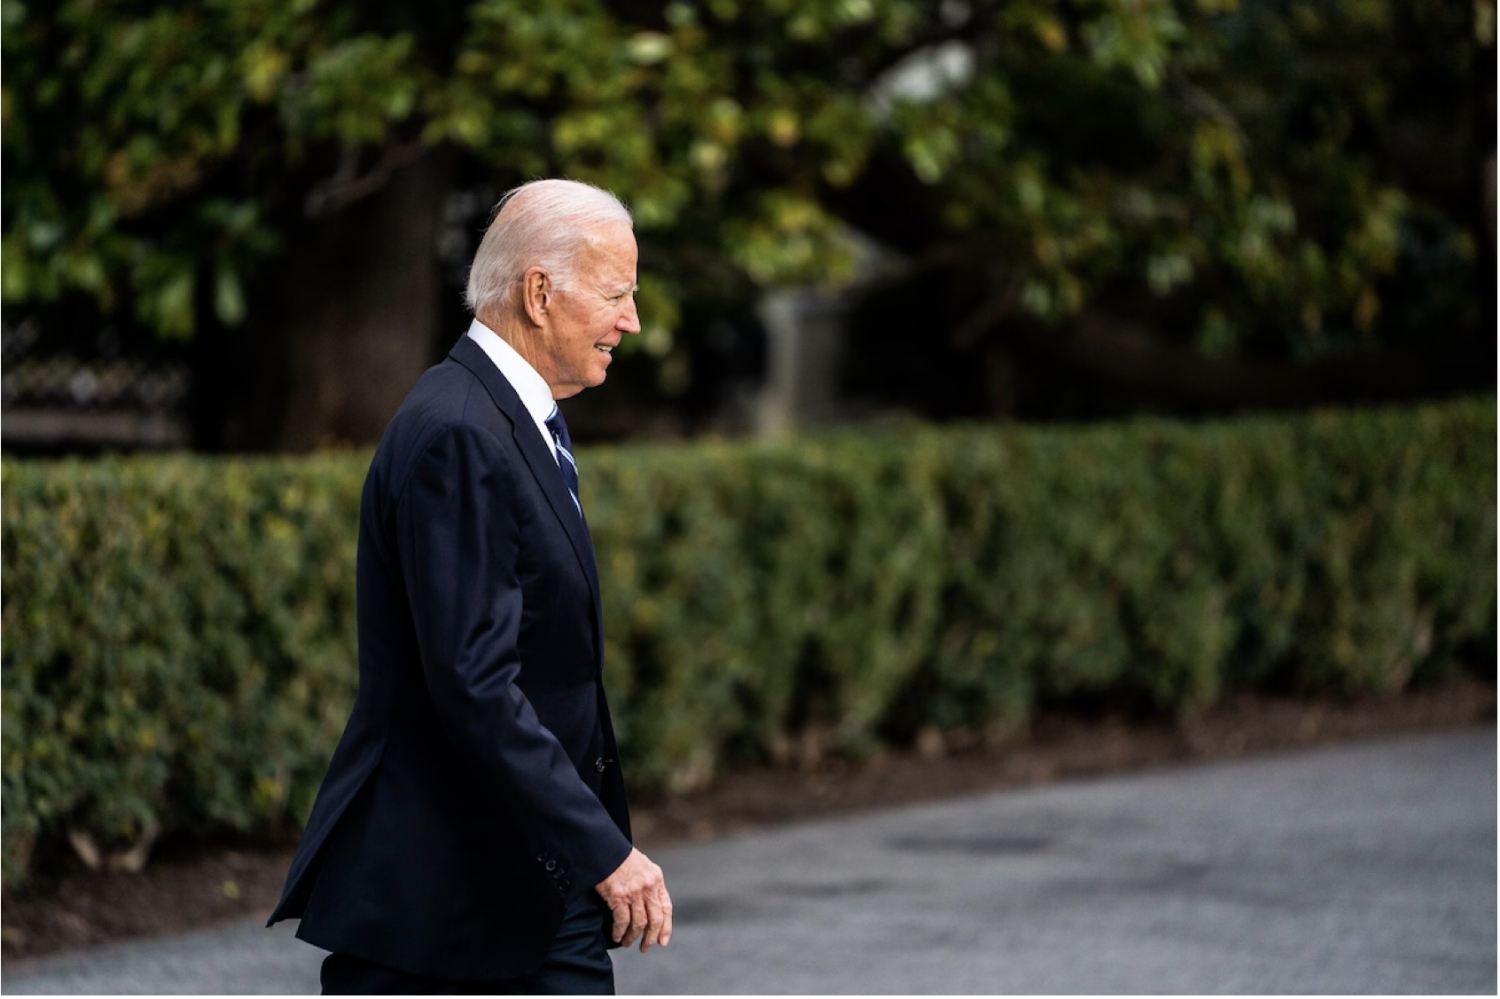 President Biden makes his way to Marine One on the South Lawn of the White House on Friday. (Demetrius Freeman/The Washington Post)